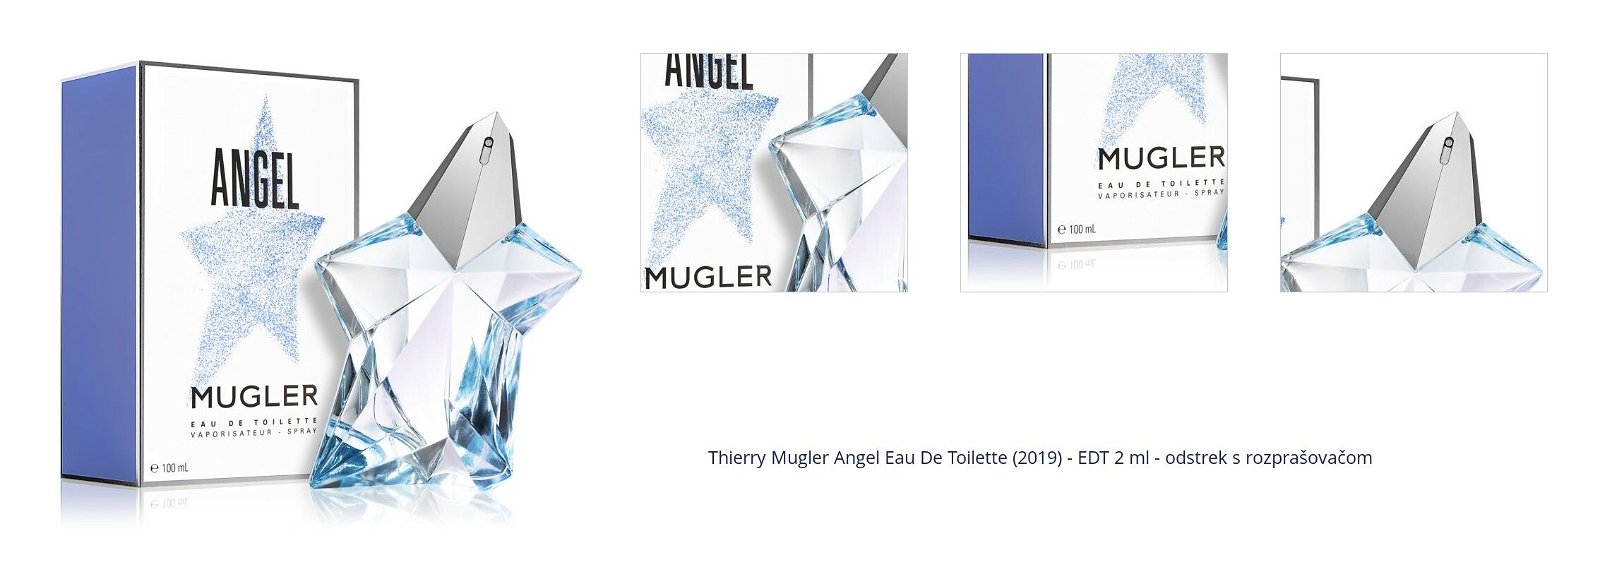 Thierry Mugler Angel Eau De Toilette (2019) - EDT 2 ml - odstrek s rozprašovačom 7